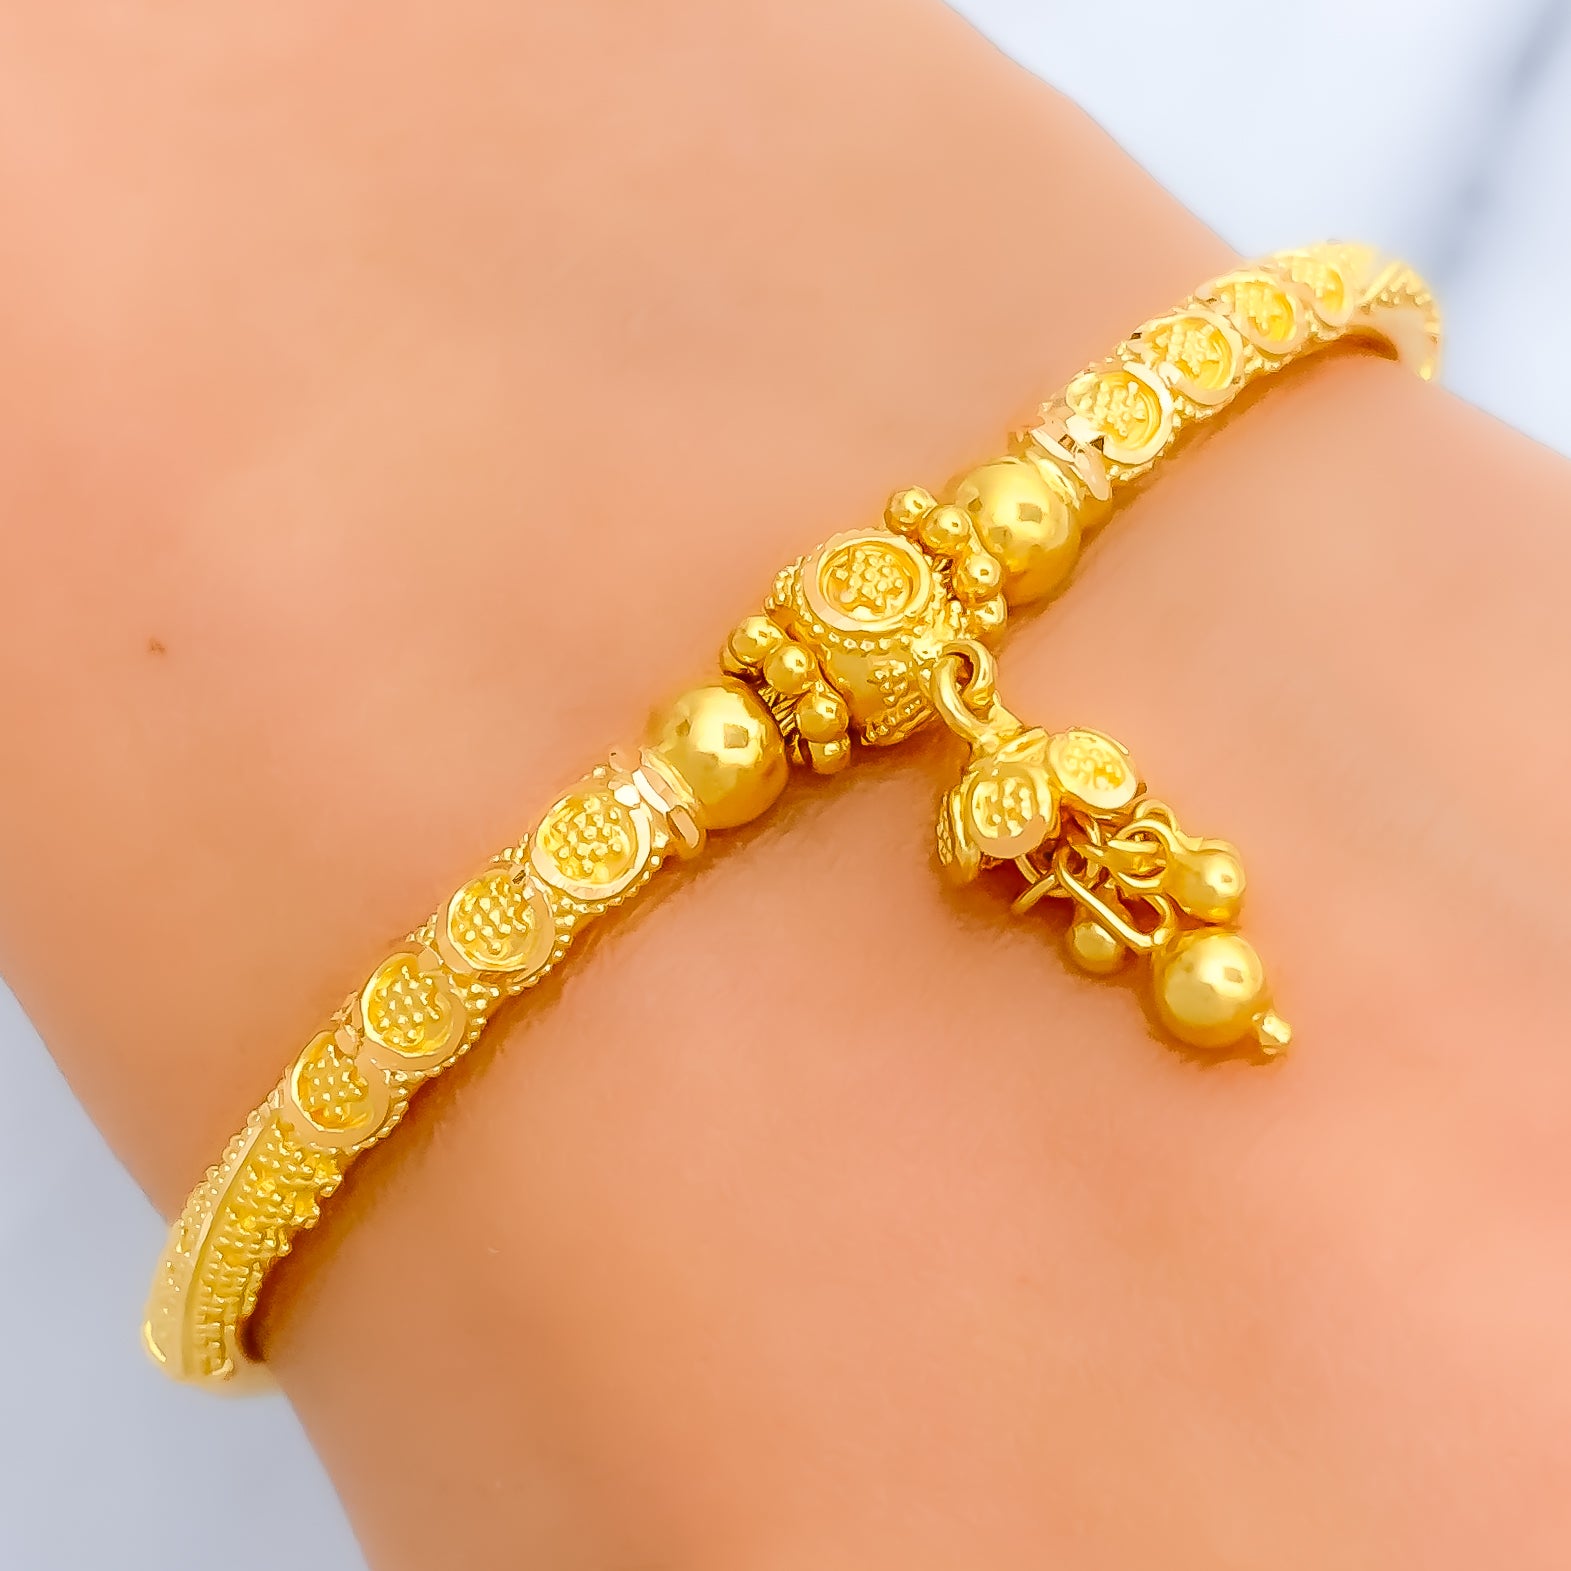 11 Flexible Bracelet ideas  gold bangles design diamond bracelet design  jewelry bracelets gold